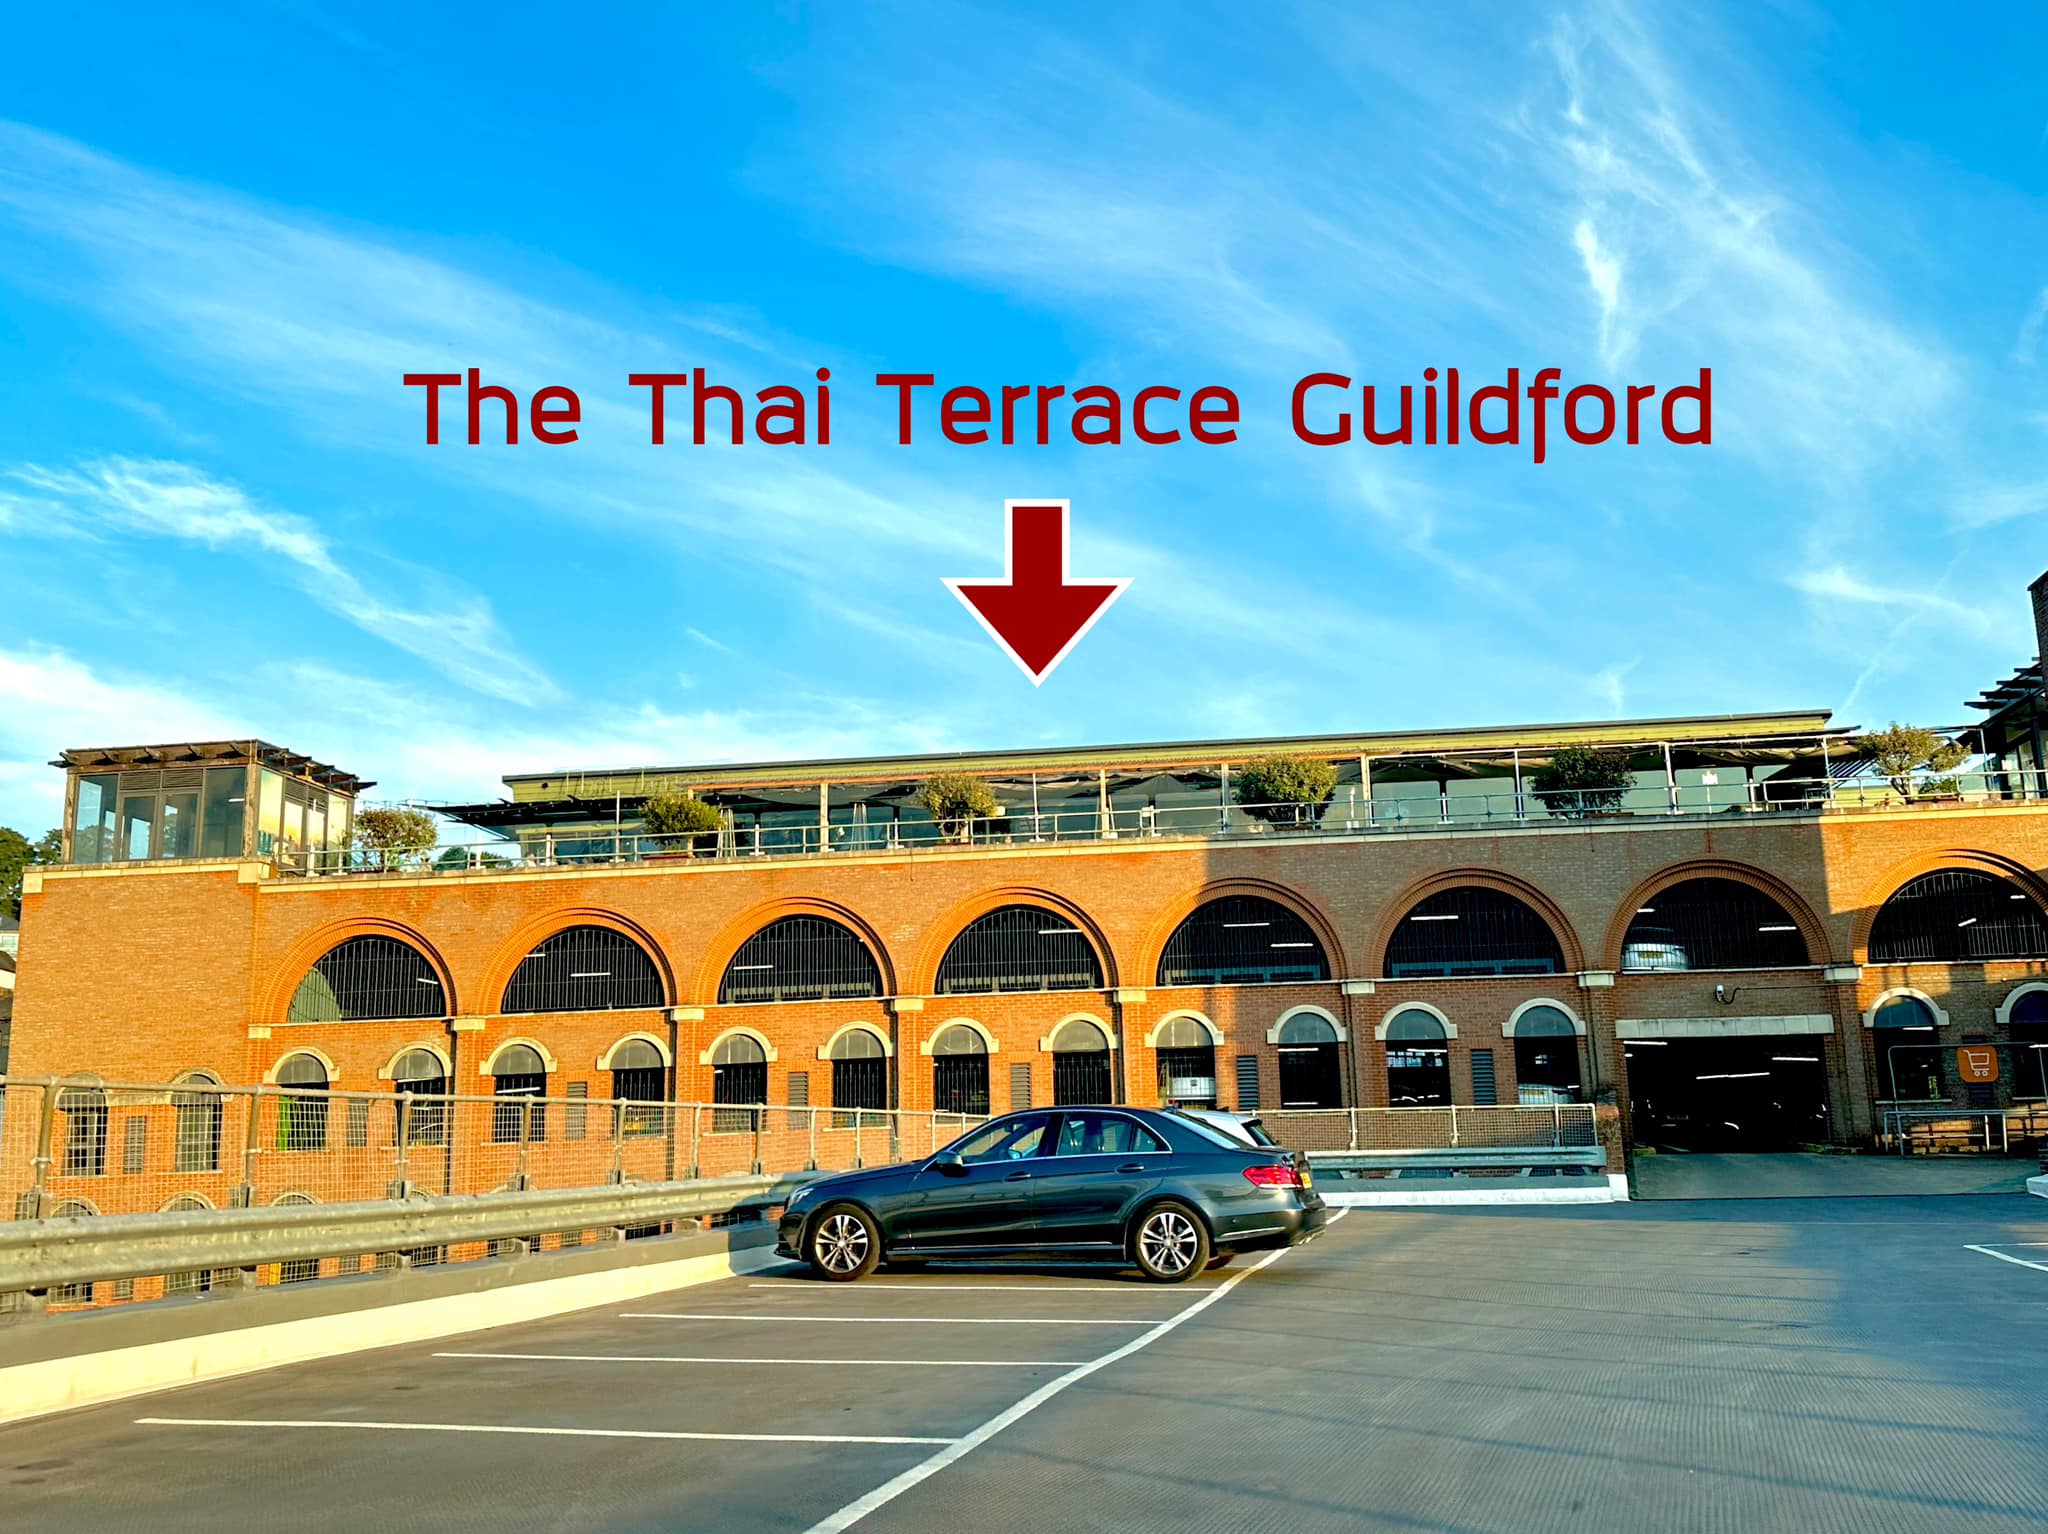 The Thai Terrace